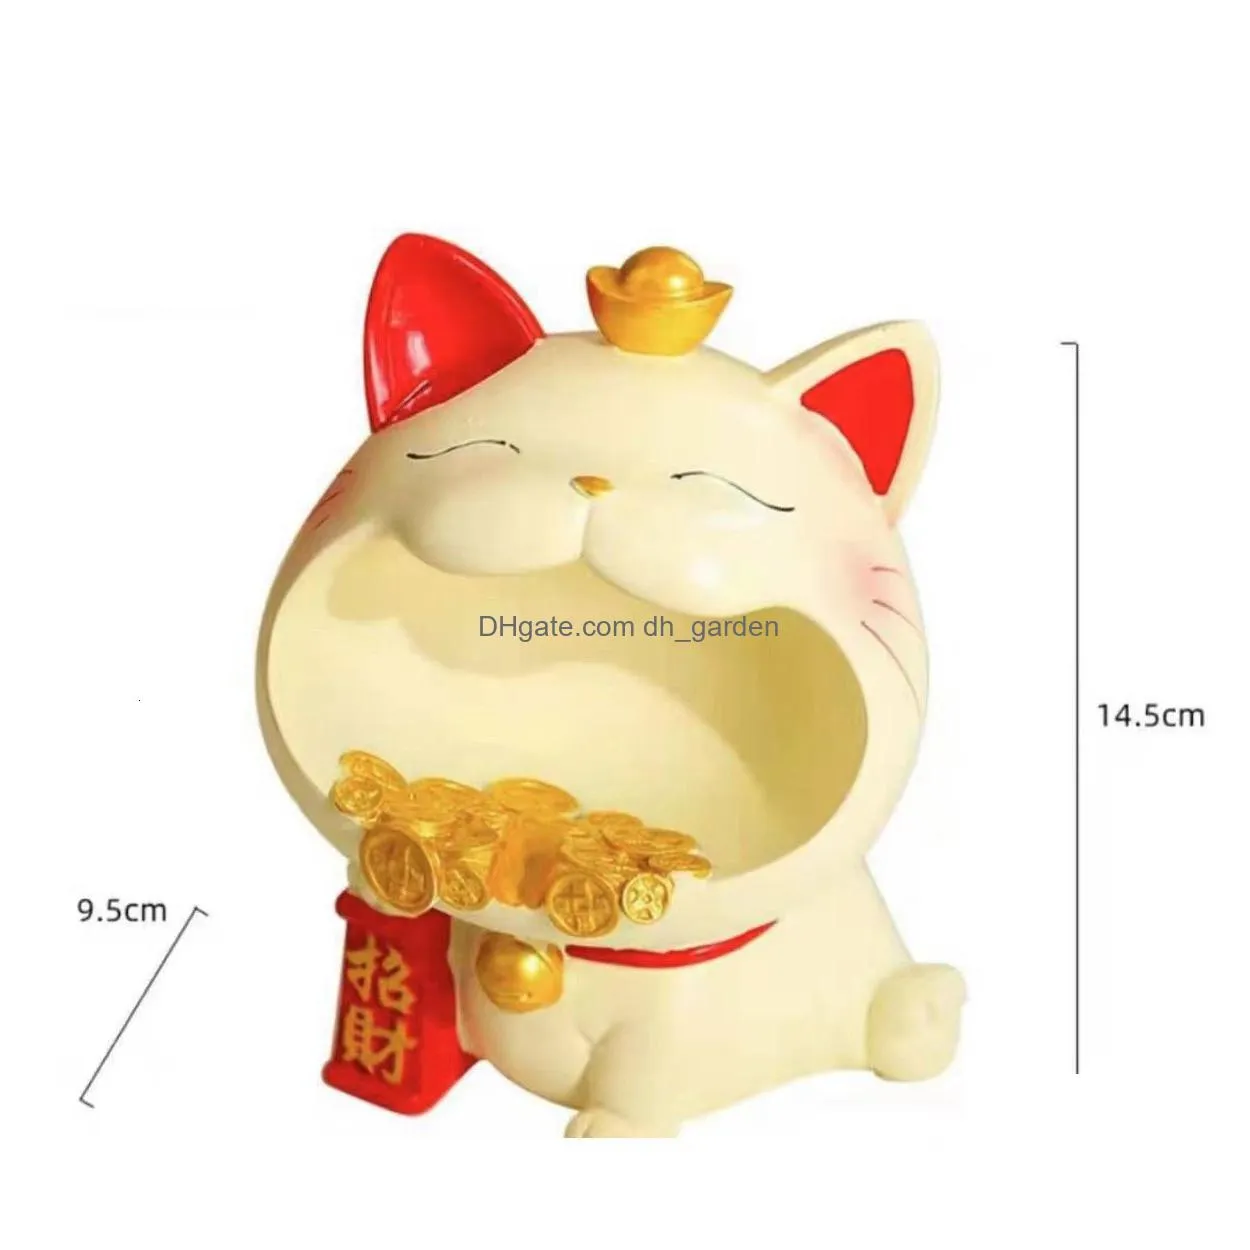 Decorative Objects & Figurines Decorative Objects Figurines Maneki Neko Candy Box Lucky Cat Fortune Storage Tray Snack Jar B Dhgarden Dh2Sa